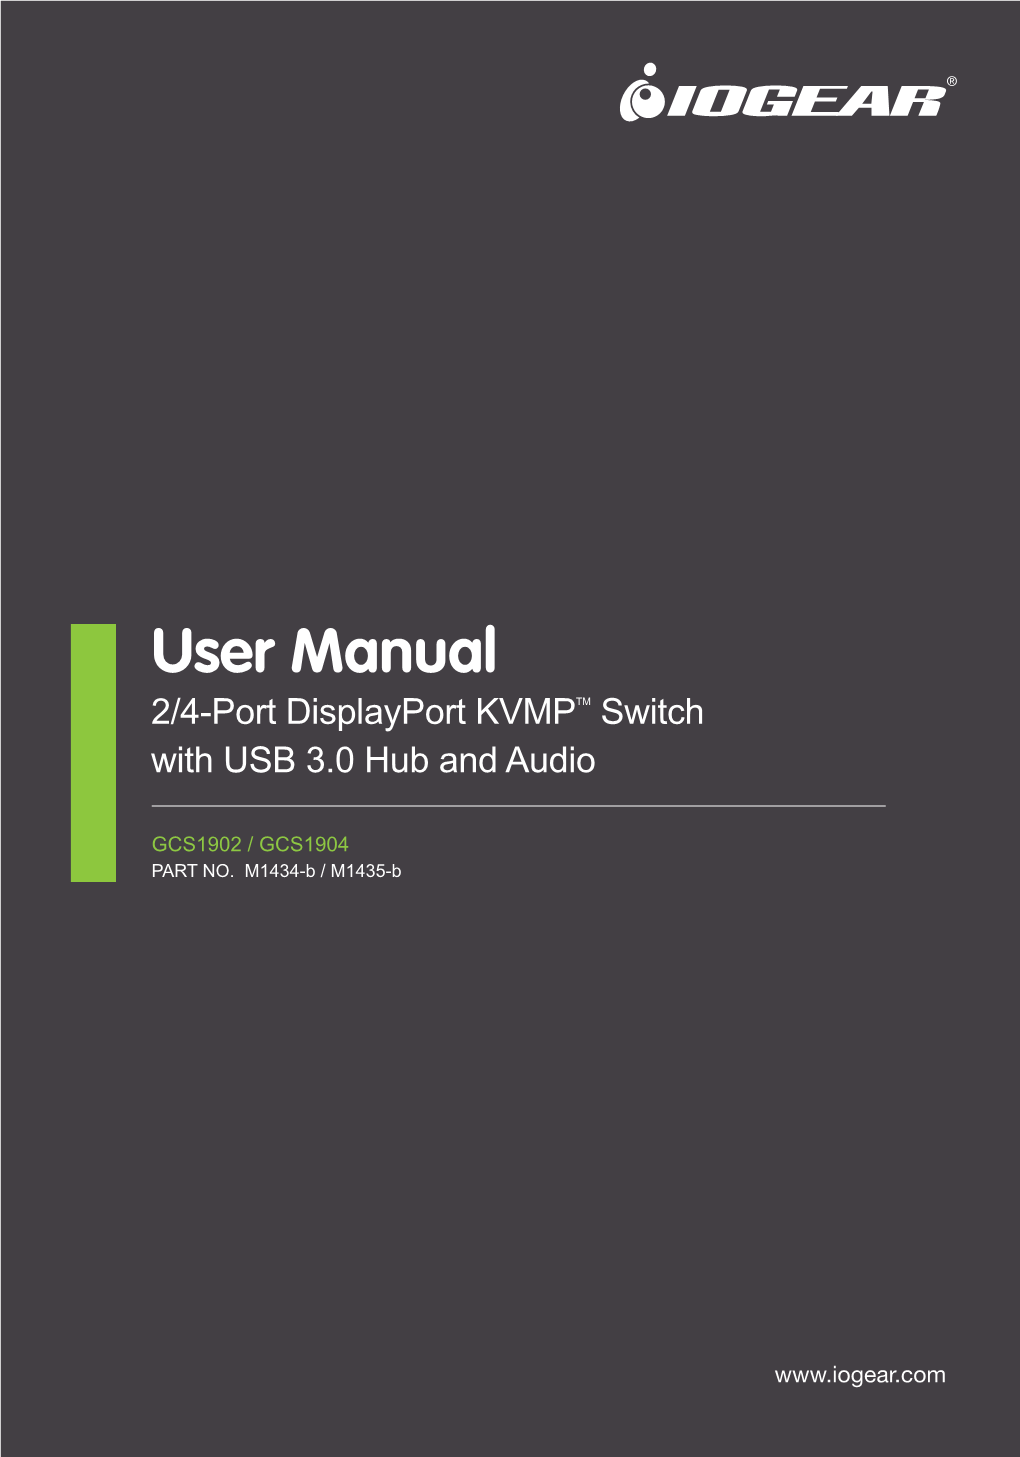 User Manual 2/4-Port Displayport KVMPTM Switch with USB 3.0 Hub and Audio